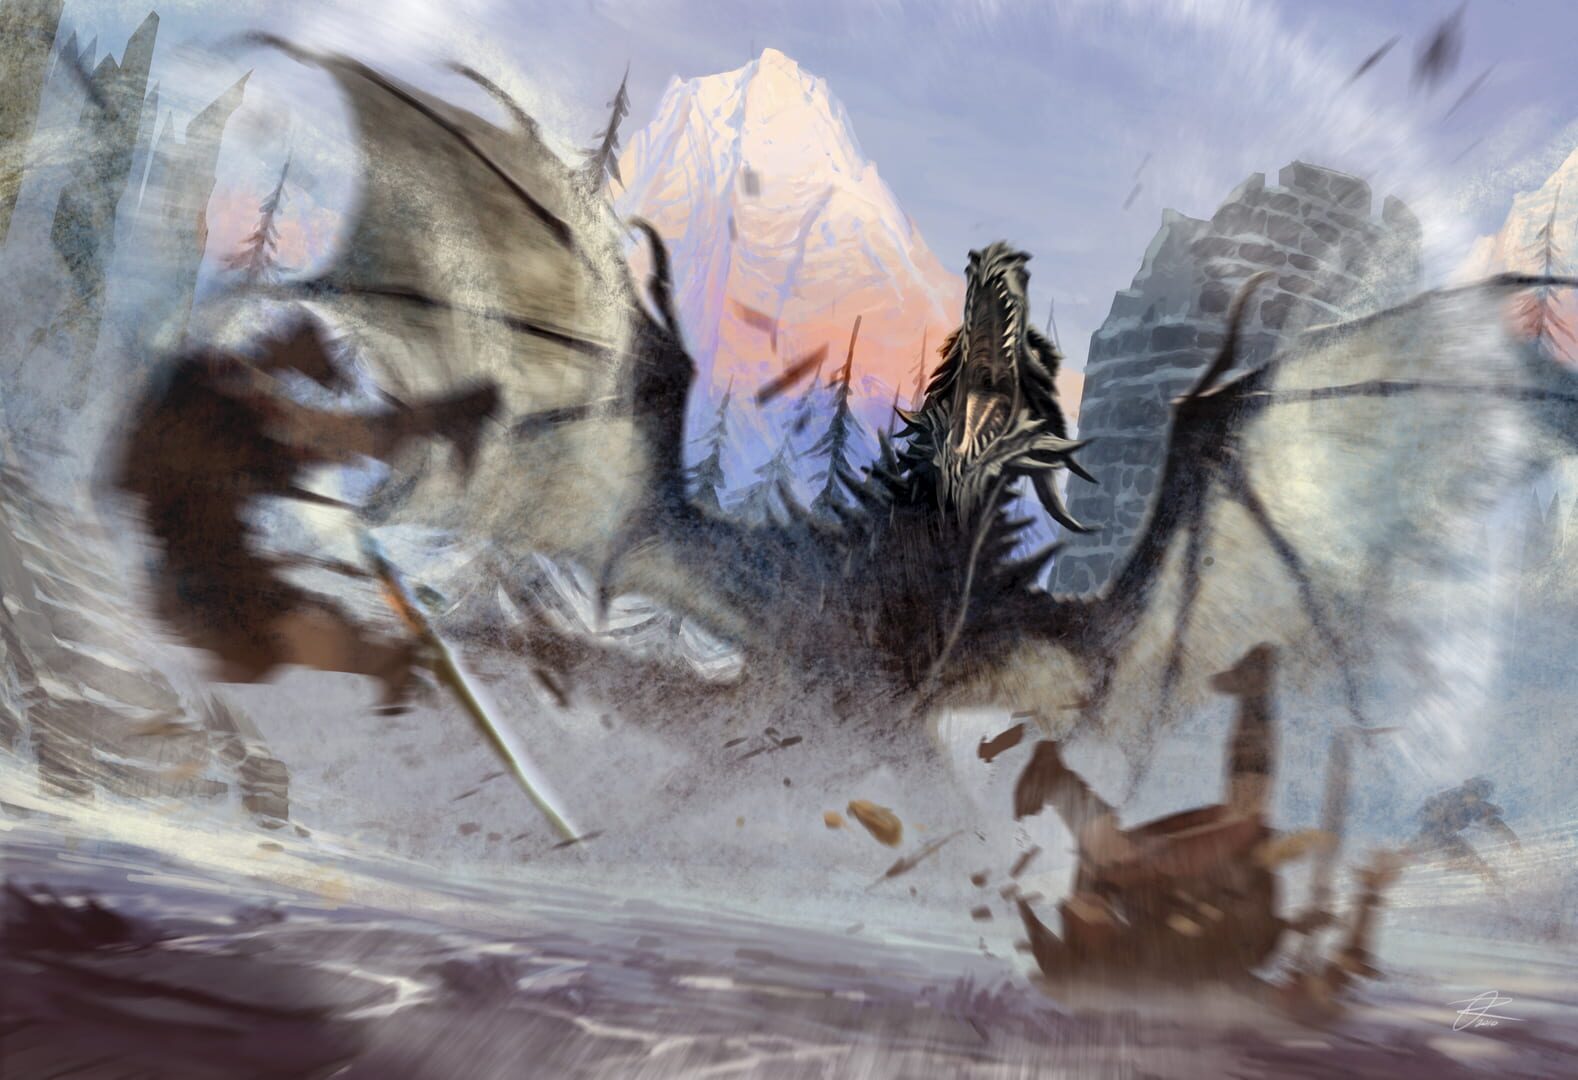 The Elder Scrolls V: Skyrim Image